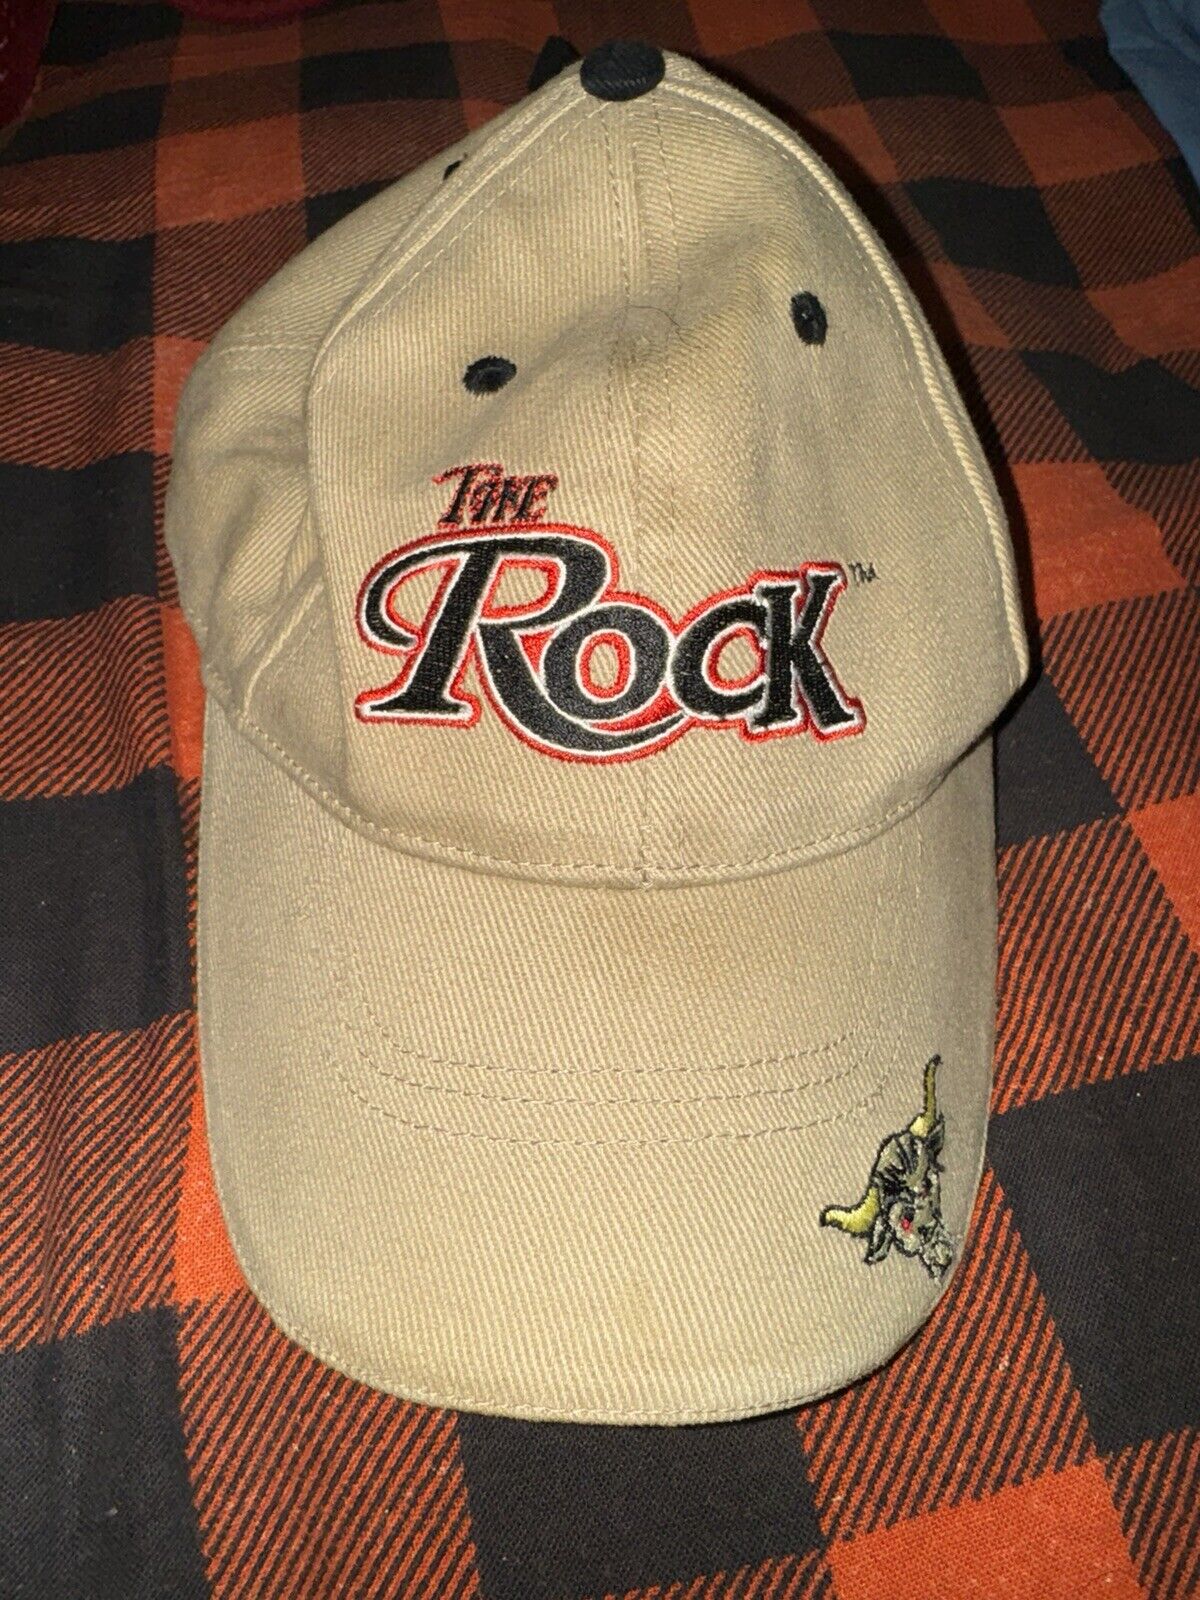 WWF (WWE) The Rock Brahma Bull cap (Hat) vintage